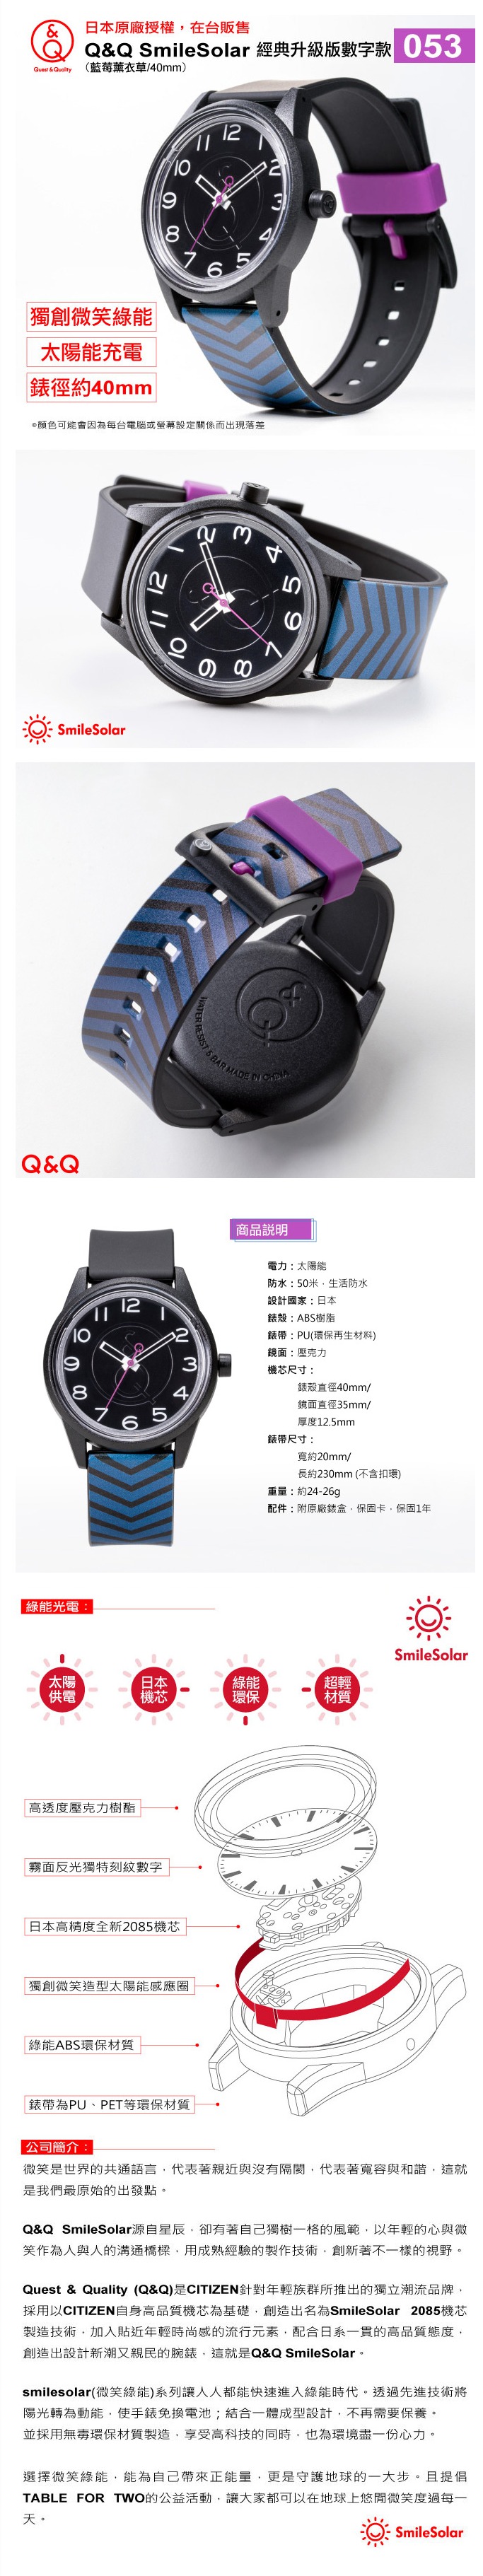 Q＆Q SmileSolar 經典升級數字款 太陽能手錶 (053 藍莓薰衣草/40mm)